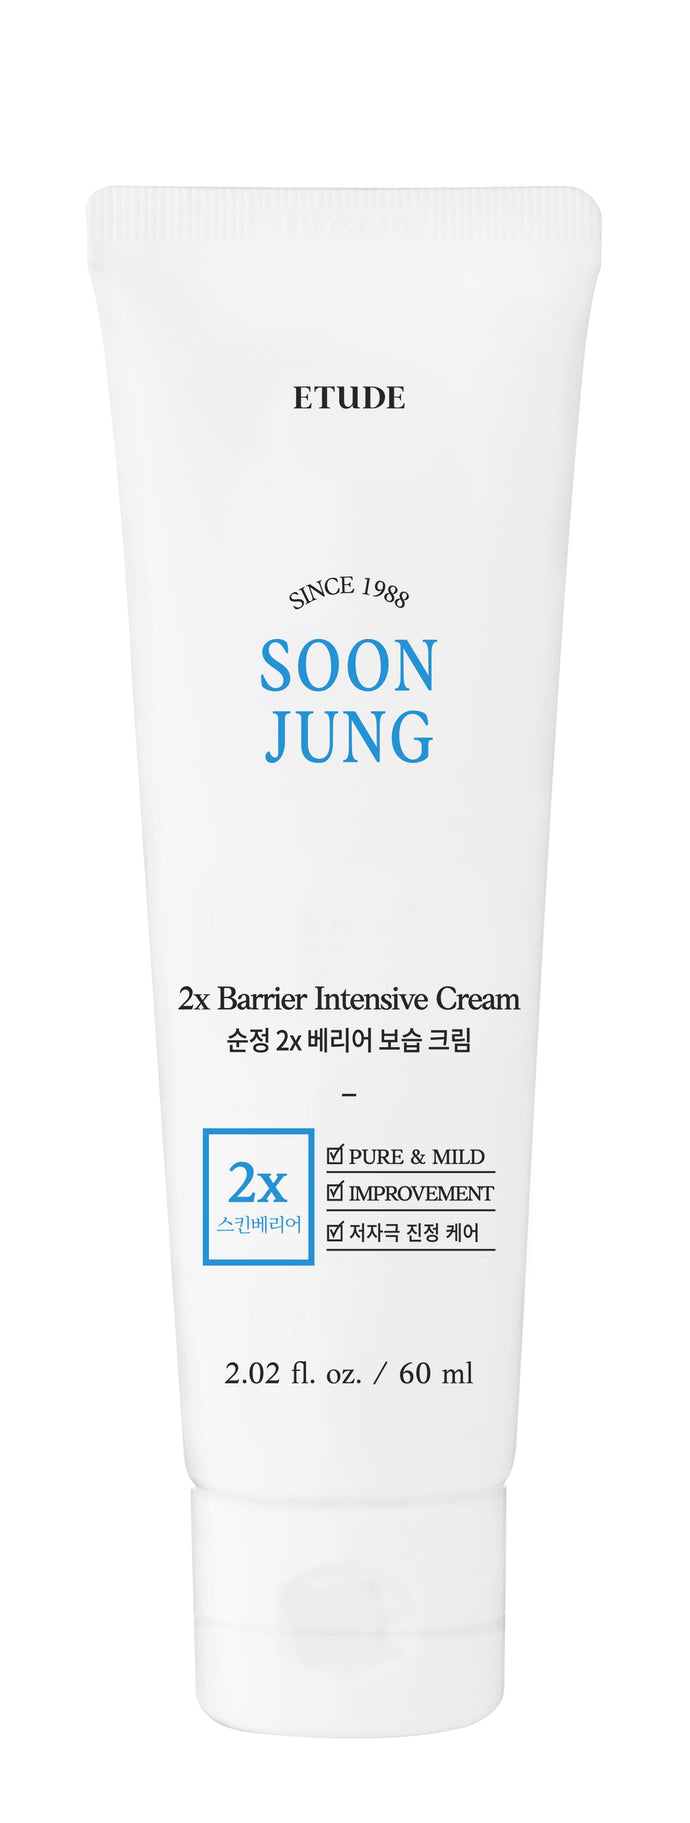 [Etude] Soon Jung 2xBarrier Intensive Cream